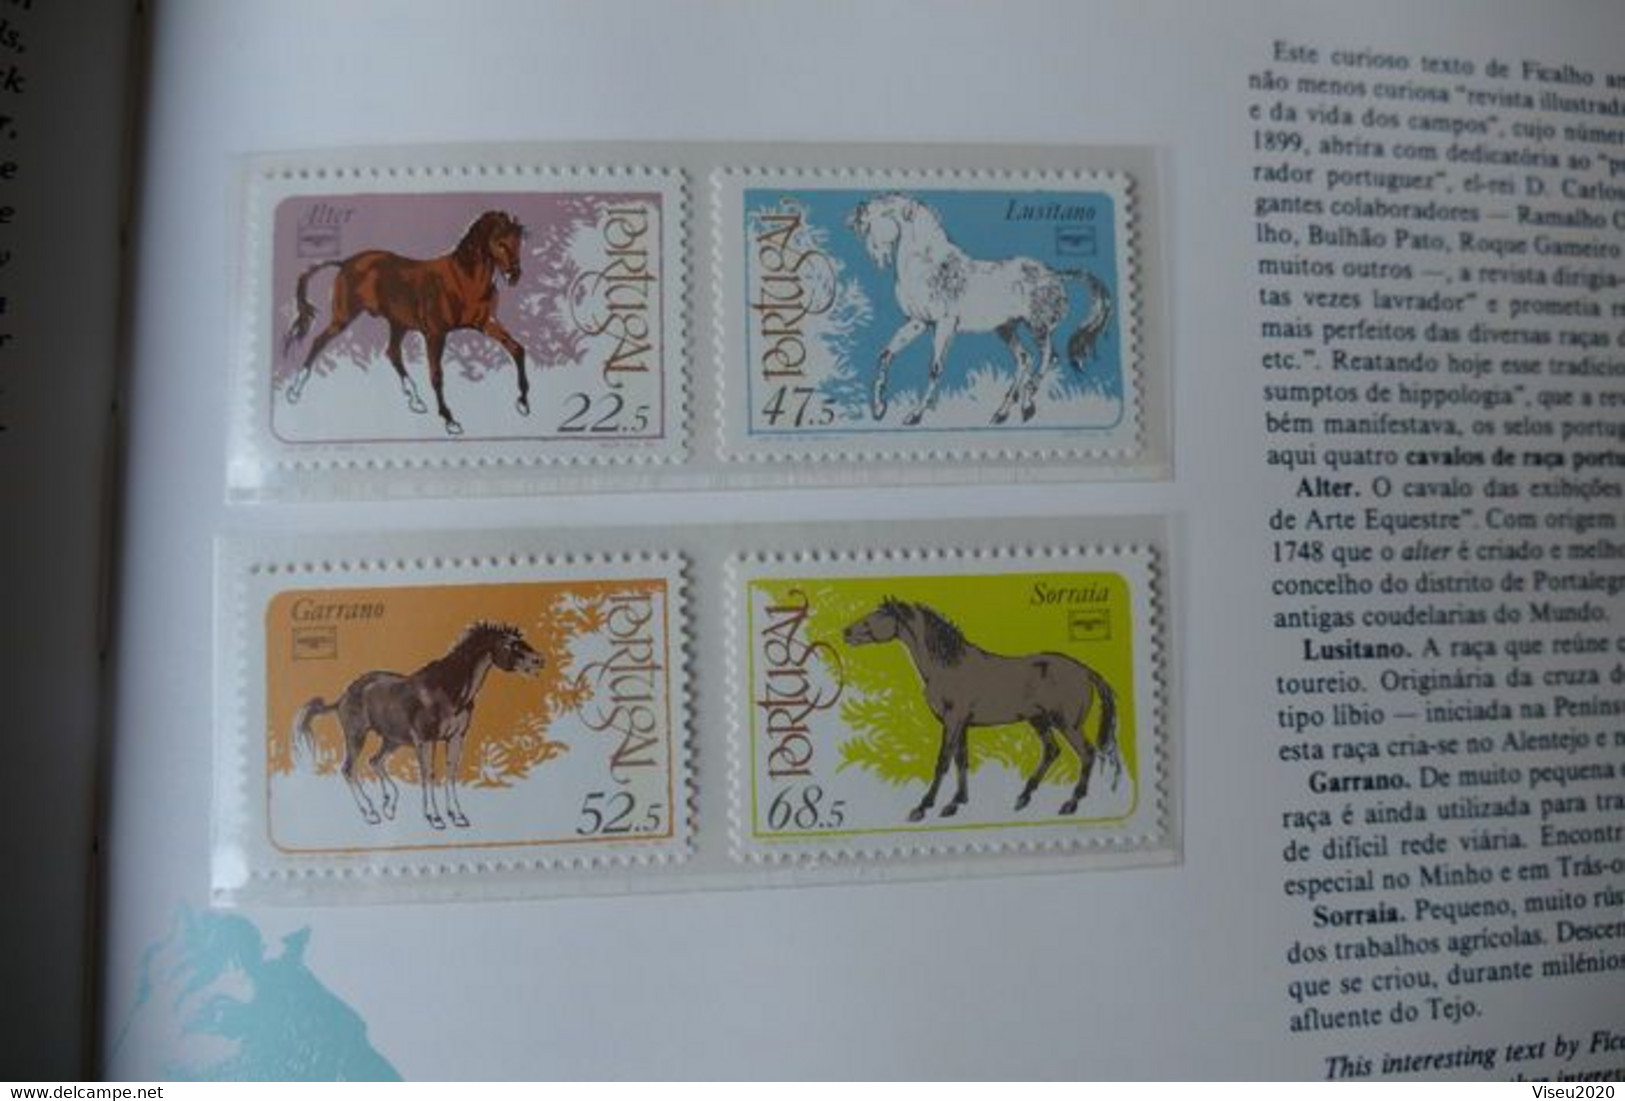 Portugal 1986, Portugal Em Selos - Stamps Of Portugal LIVRO TEMATICO CTT - Buch Des Jahres